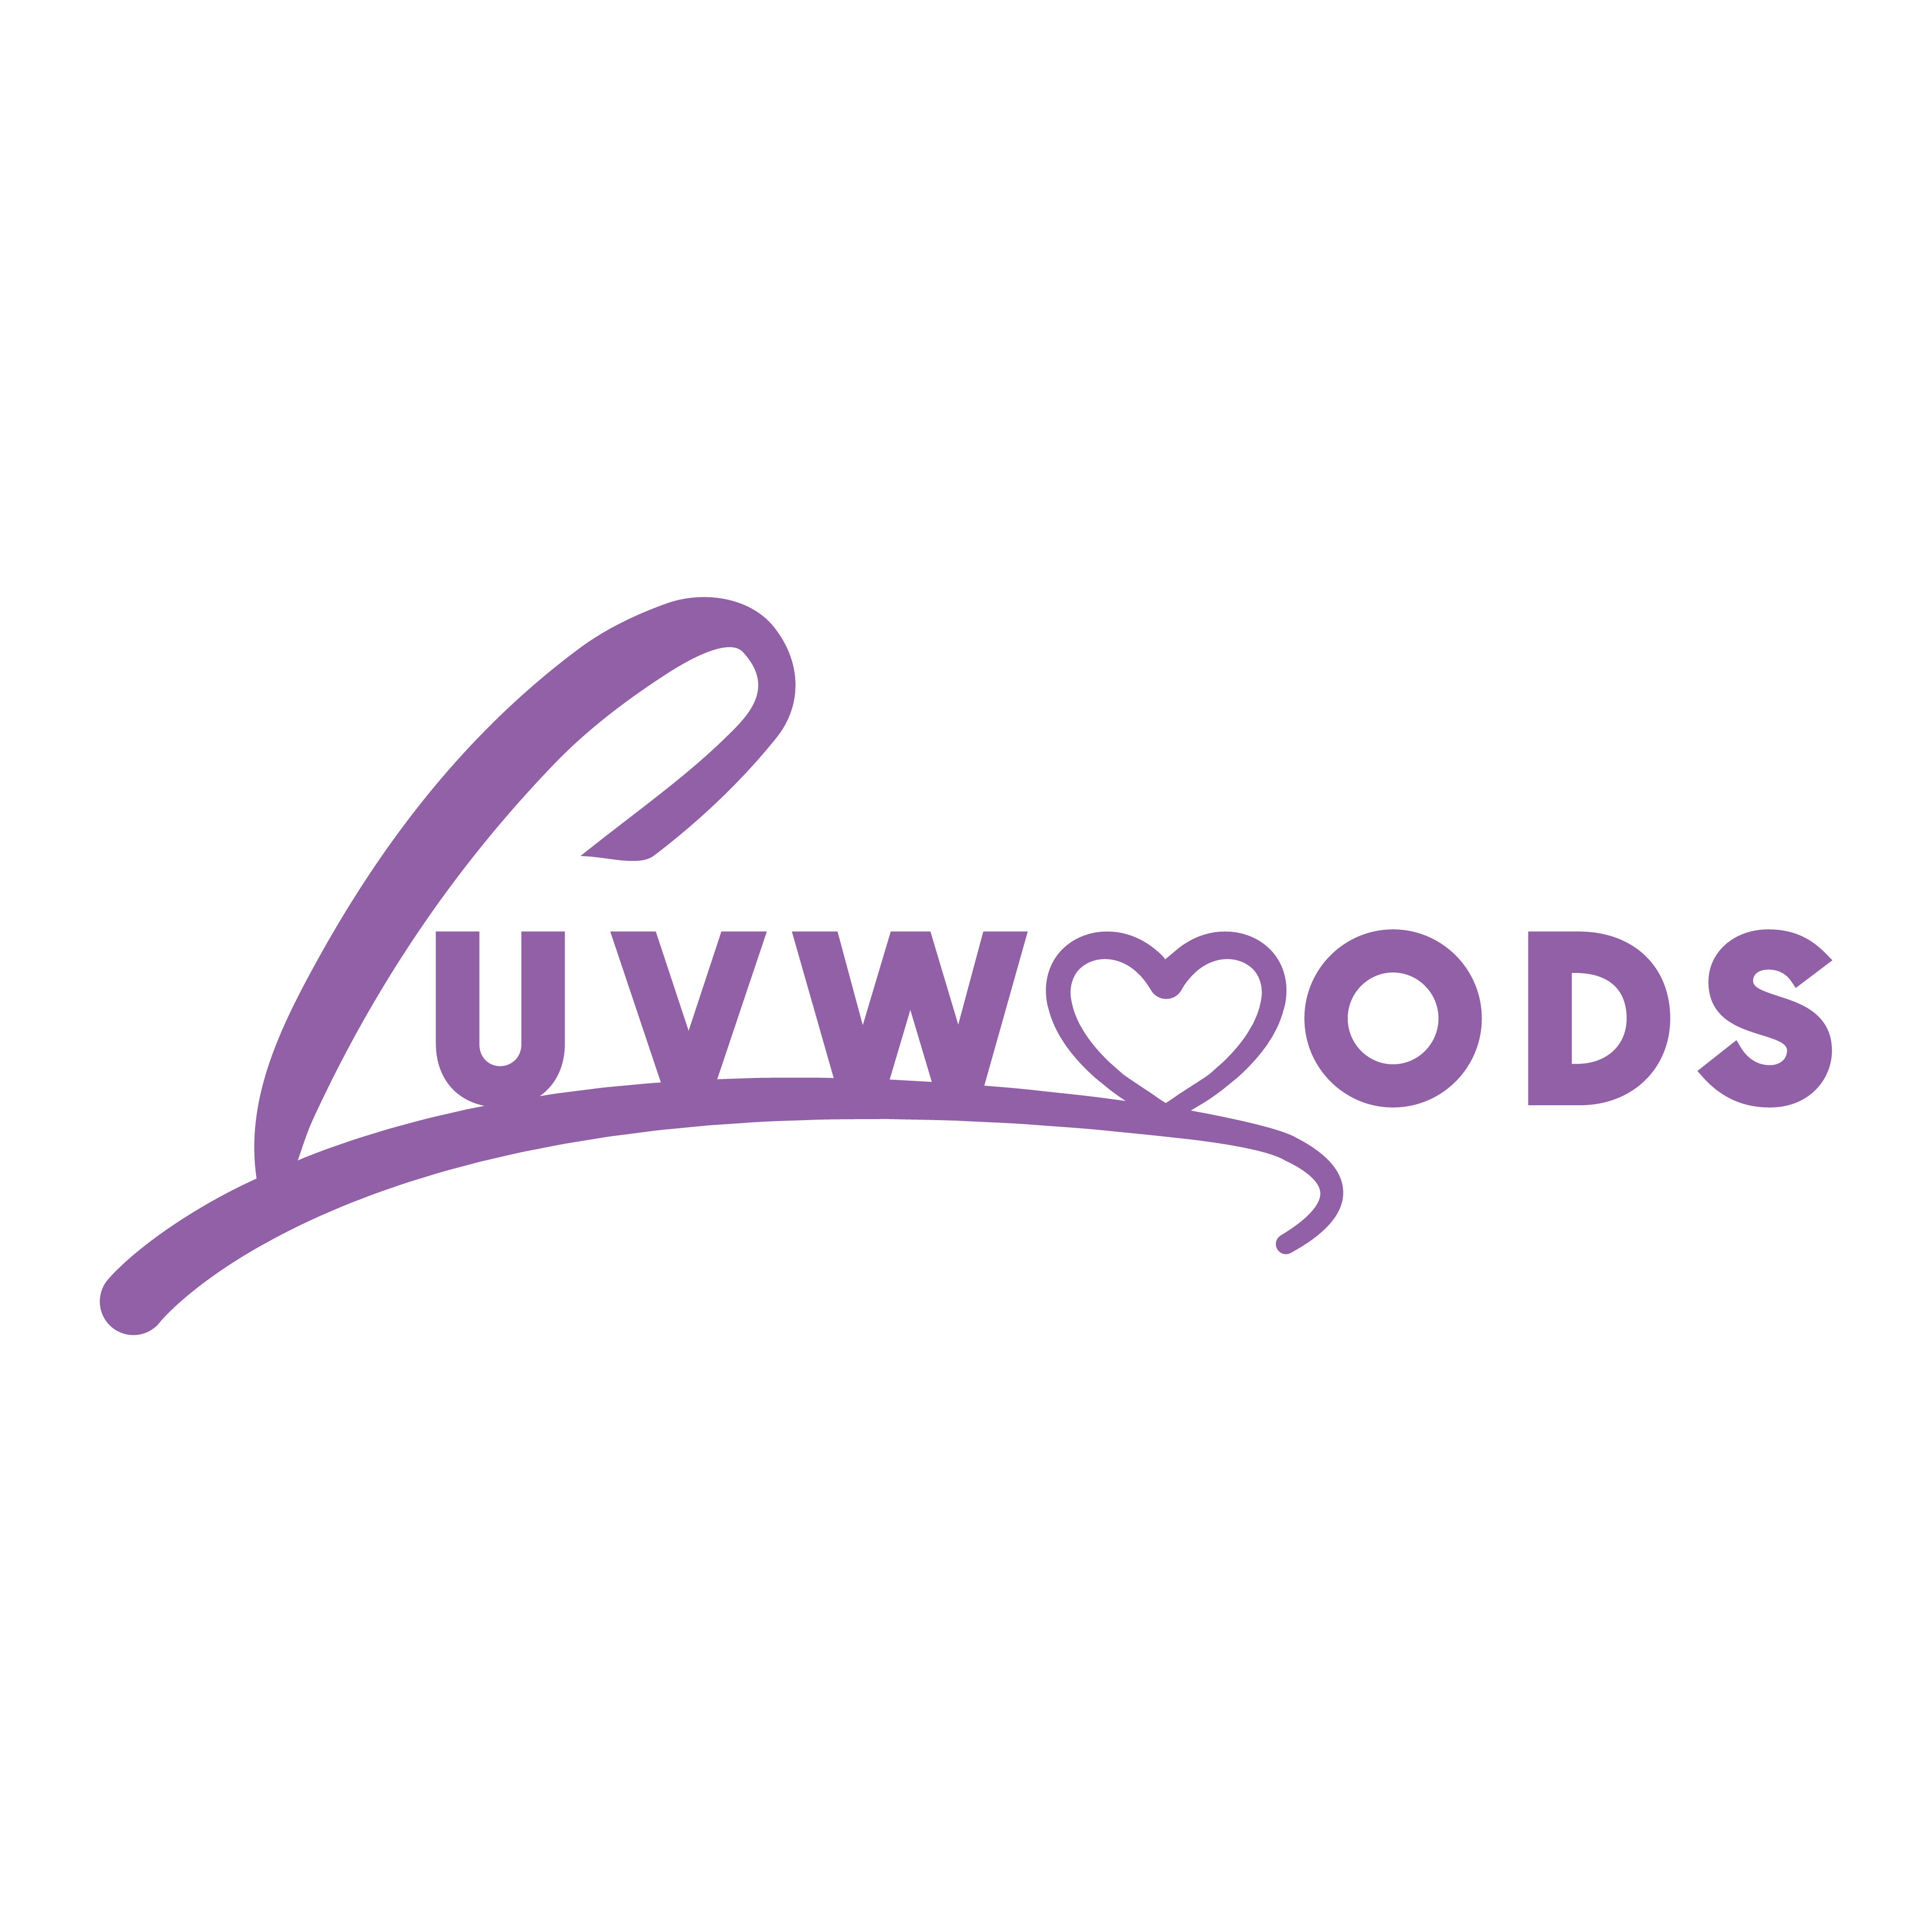 Luvwoods